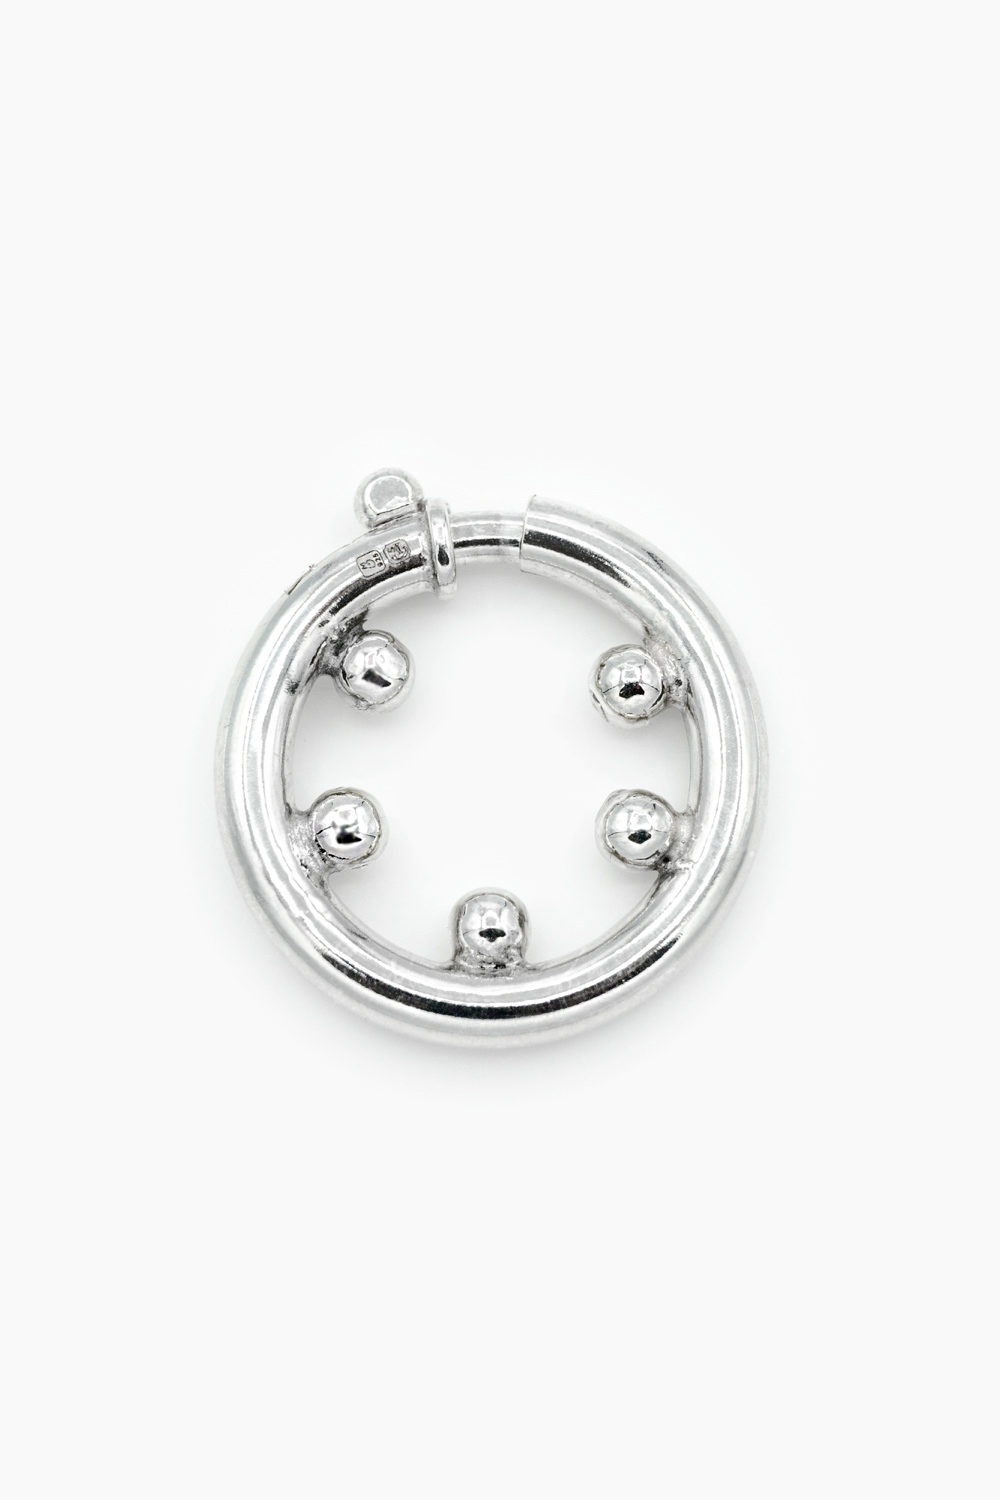 Jewellery Concept: Lock Moges Prata